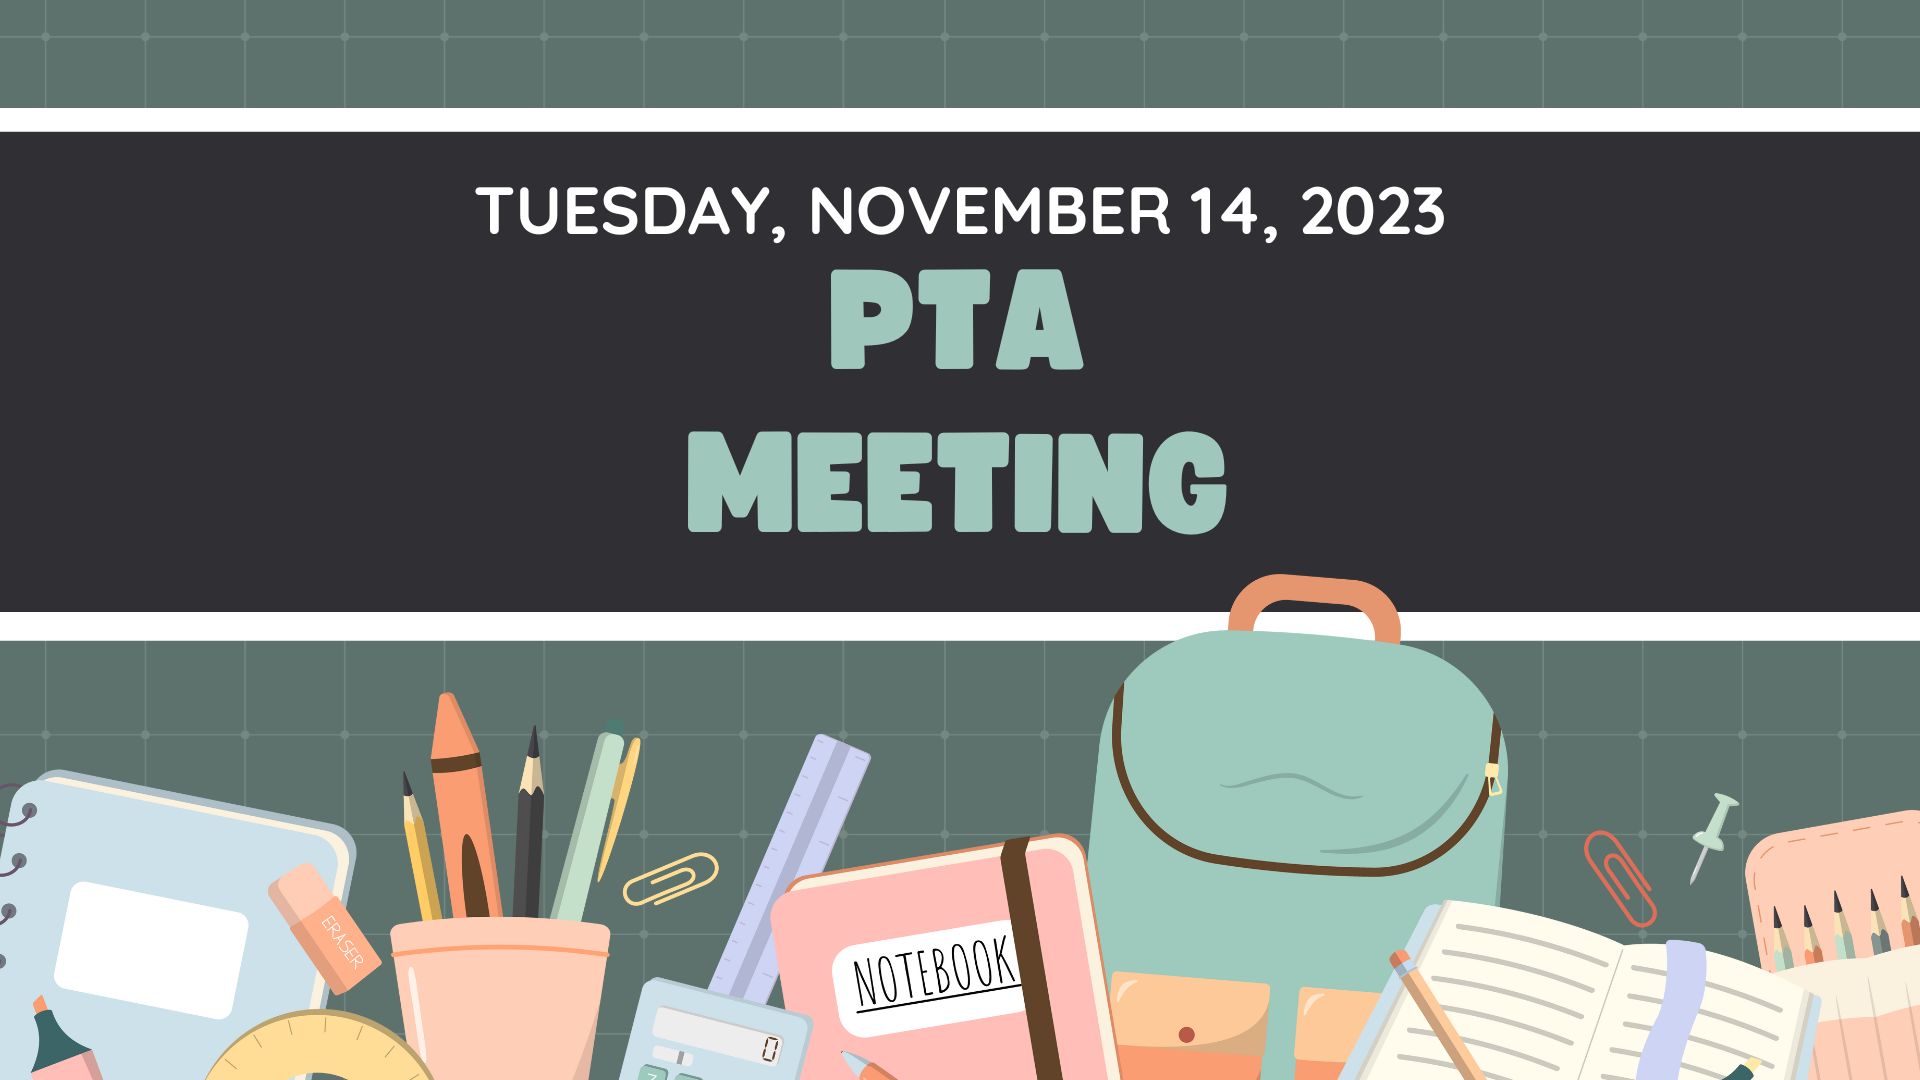 Tuesday, November 14, 2023 PTA Meeting